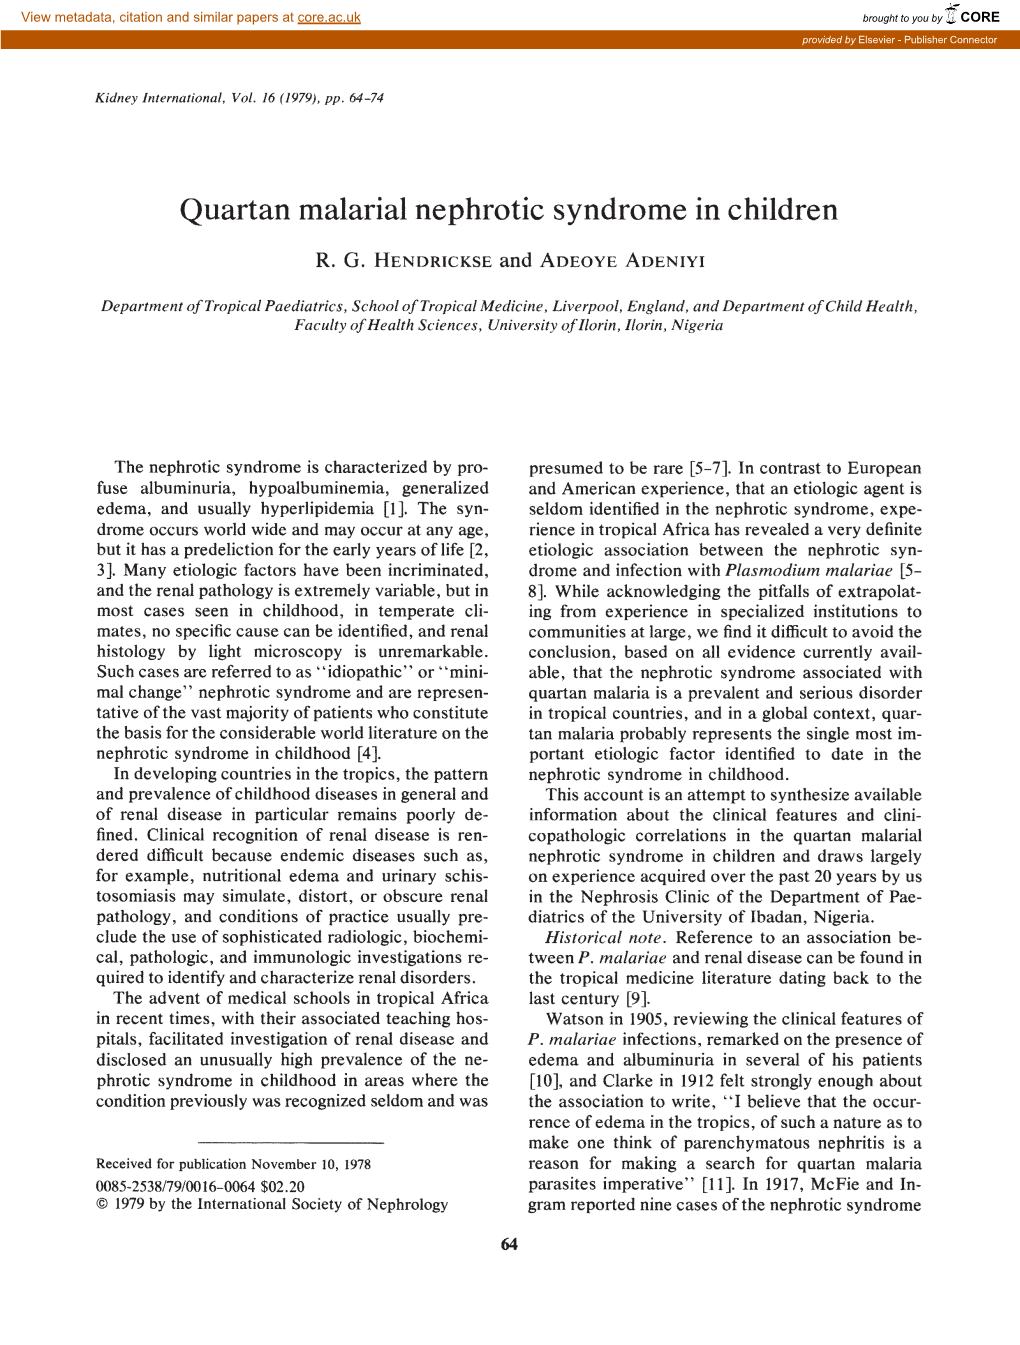 Quartan Malarial Nephrotic Syndrome in Children